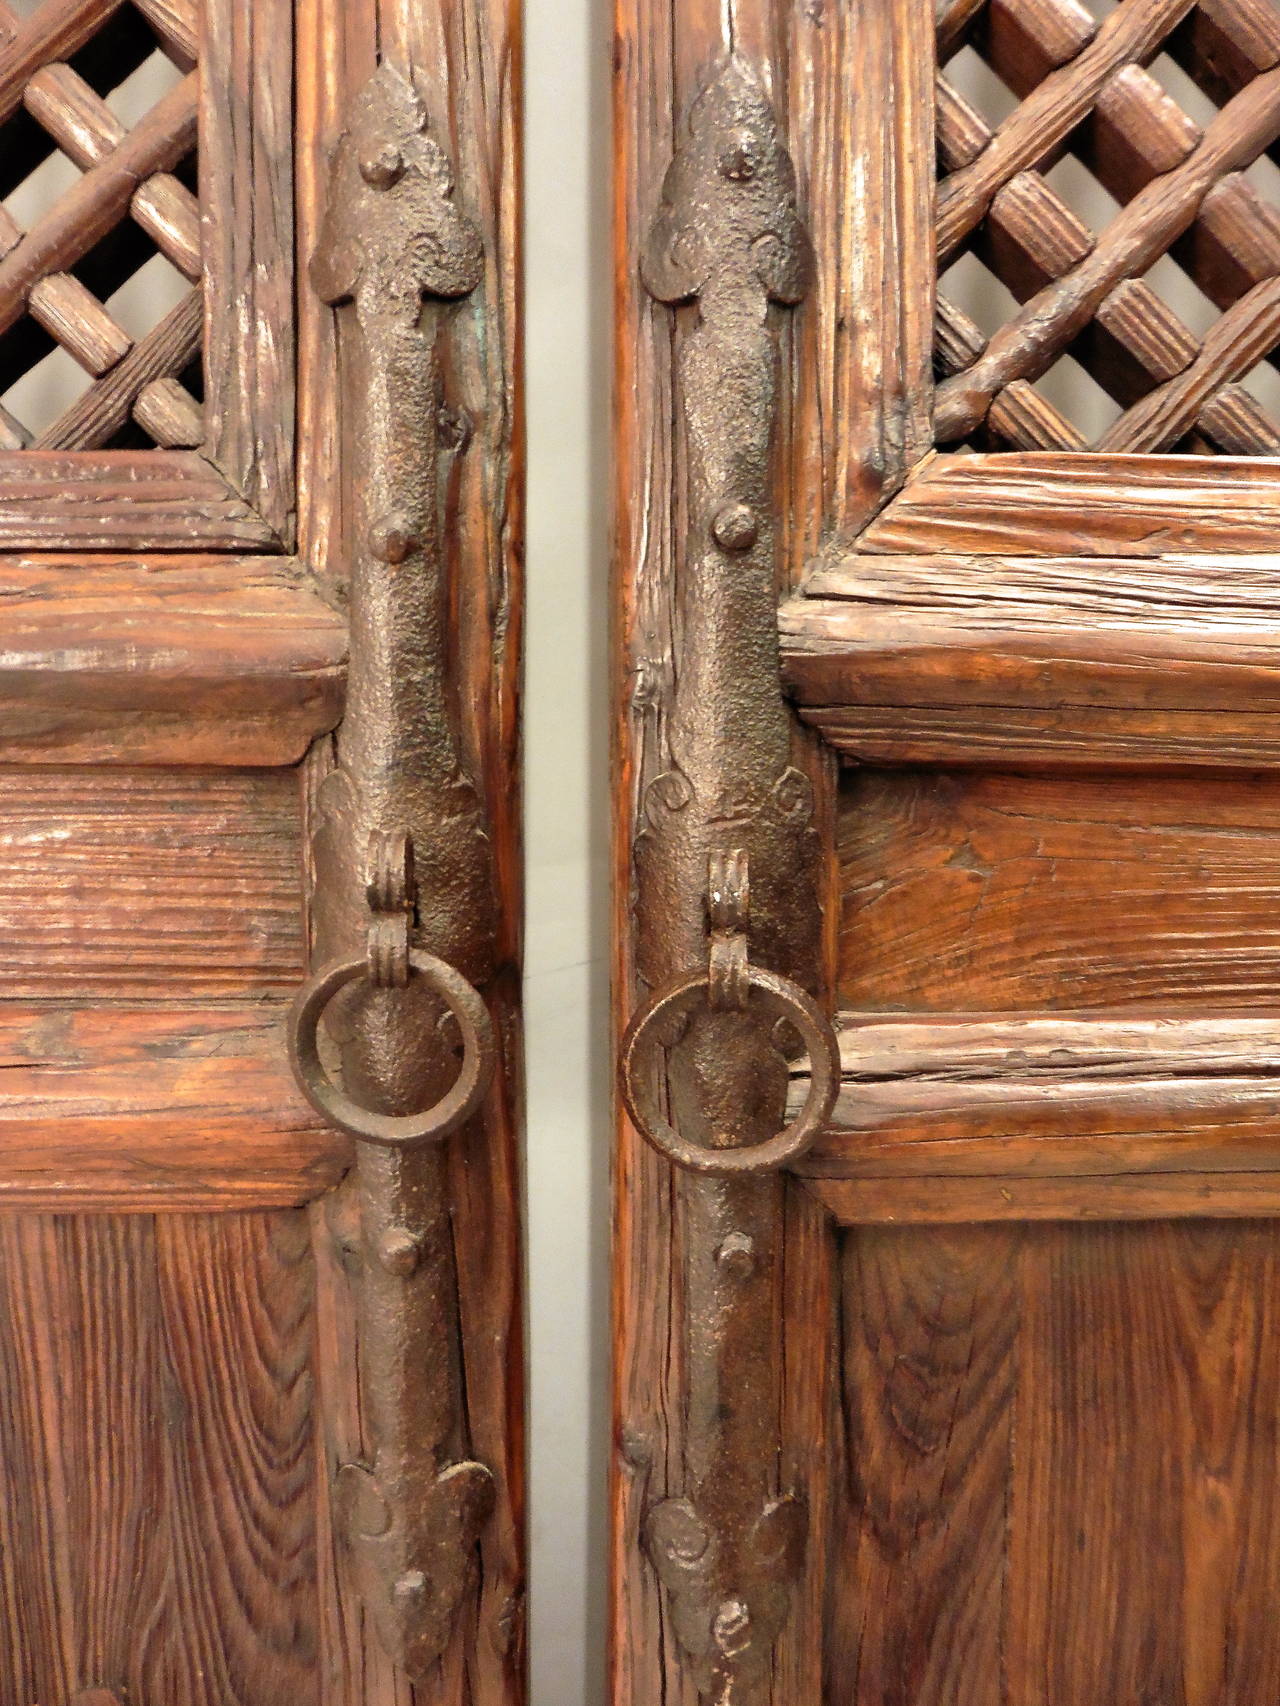 Chinese elm eight panel window lattice screen doors from Shanxi Province 19th Century with circular iron handles.